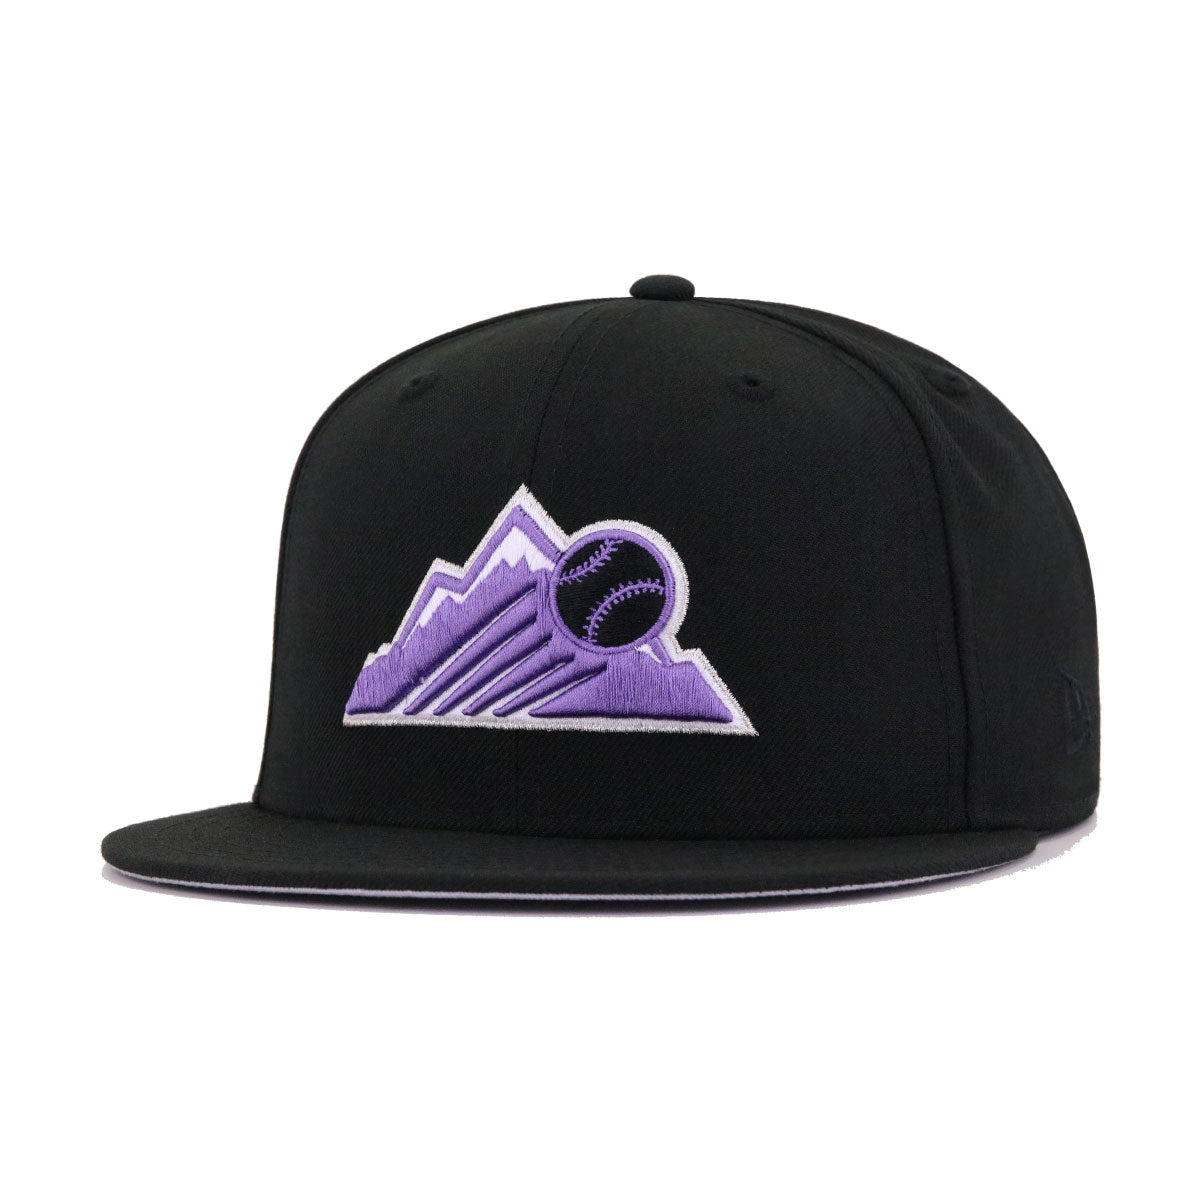 Colorado Baseball Hat Black Lake Purple Batting Practice New Era 59FIFTY Fitted Black / Real Black | Snow White | Lake Purple / 7 5/8